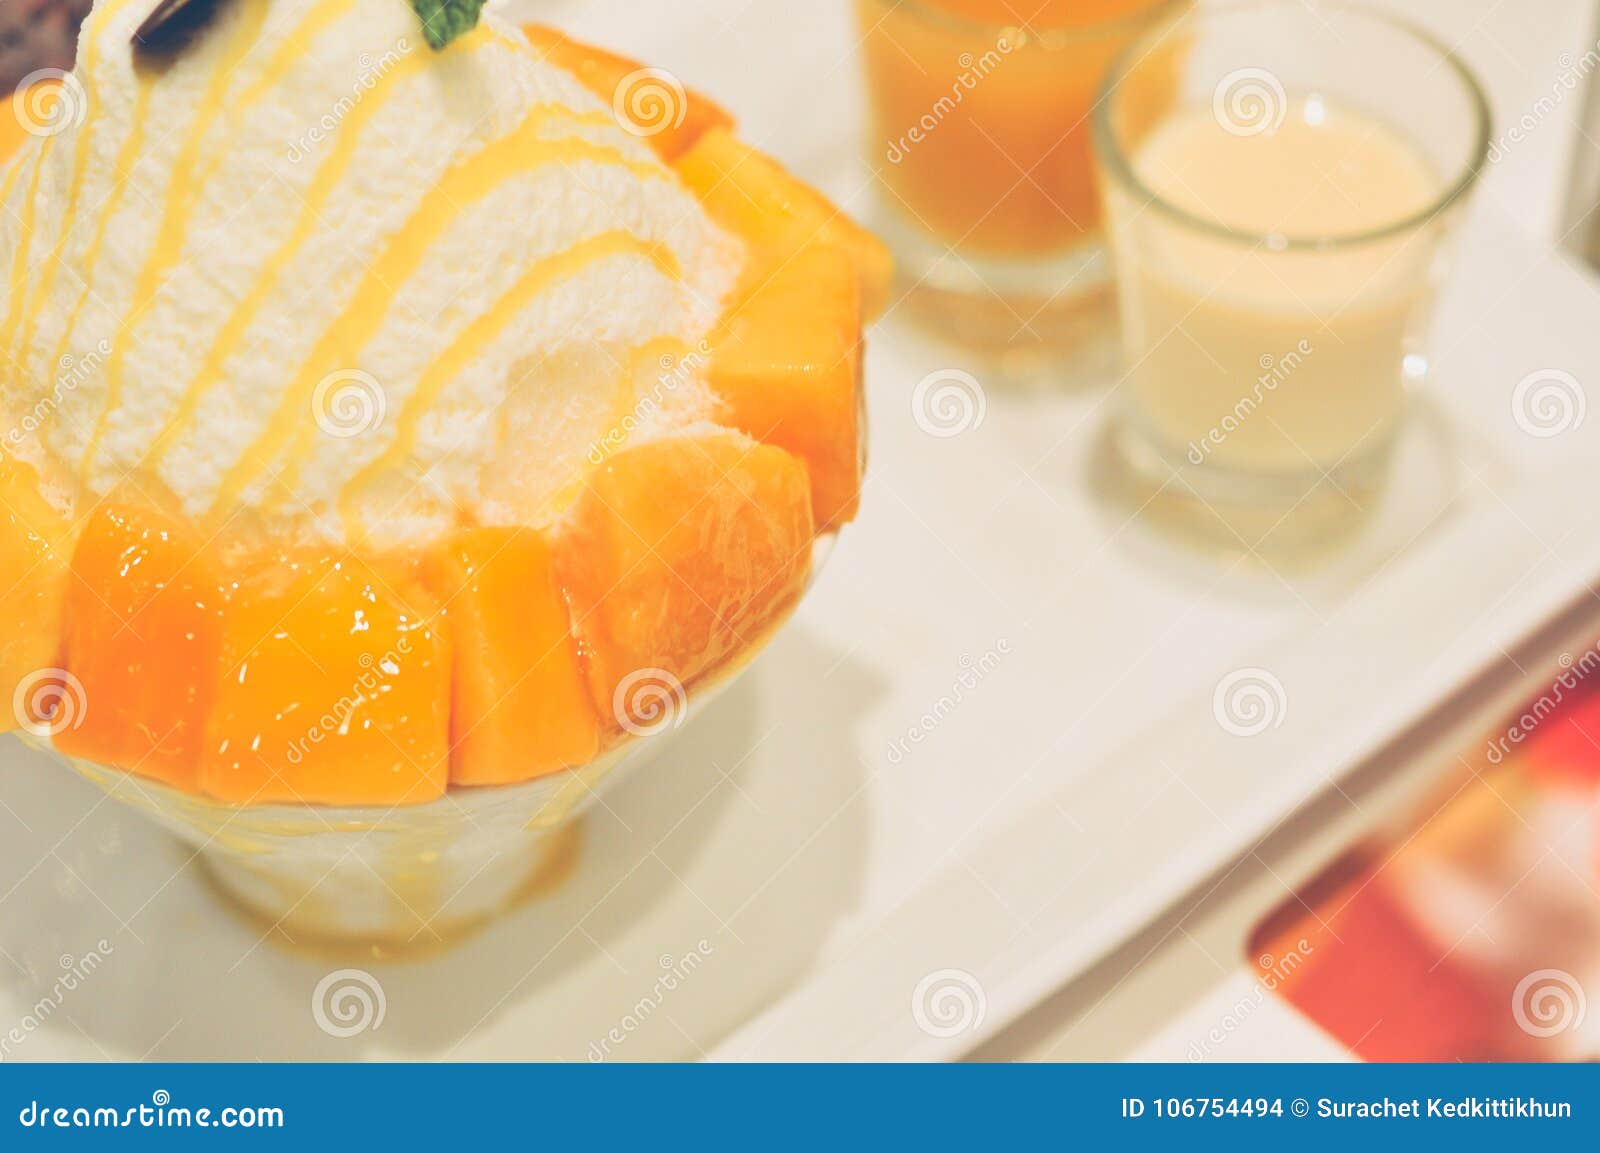 Mango Bingsu Korean Dessert Healthy Fruit on the Table, Food Designed ...